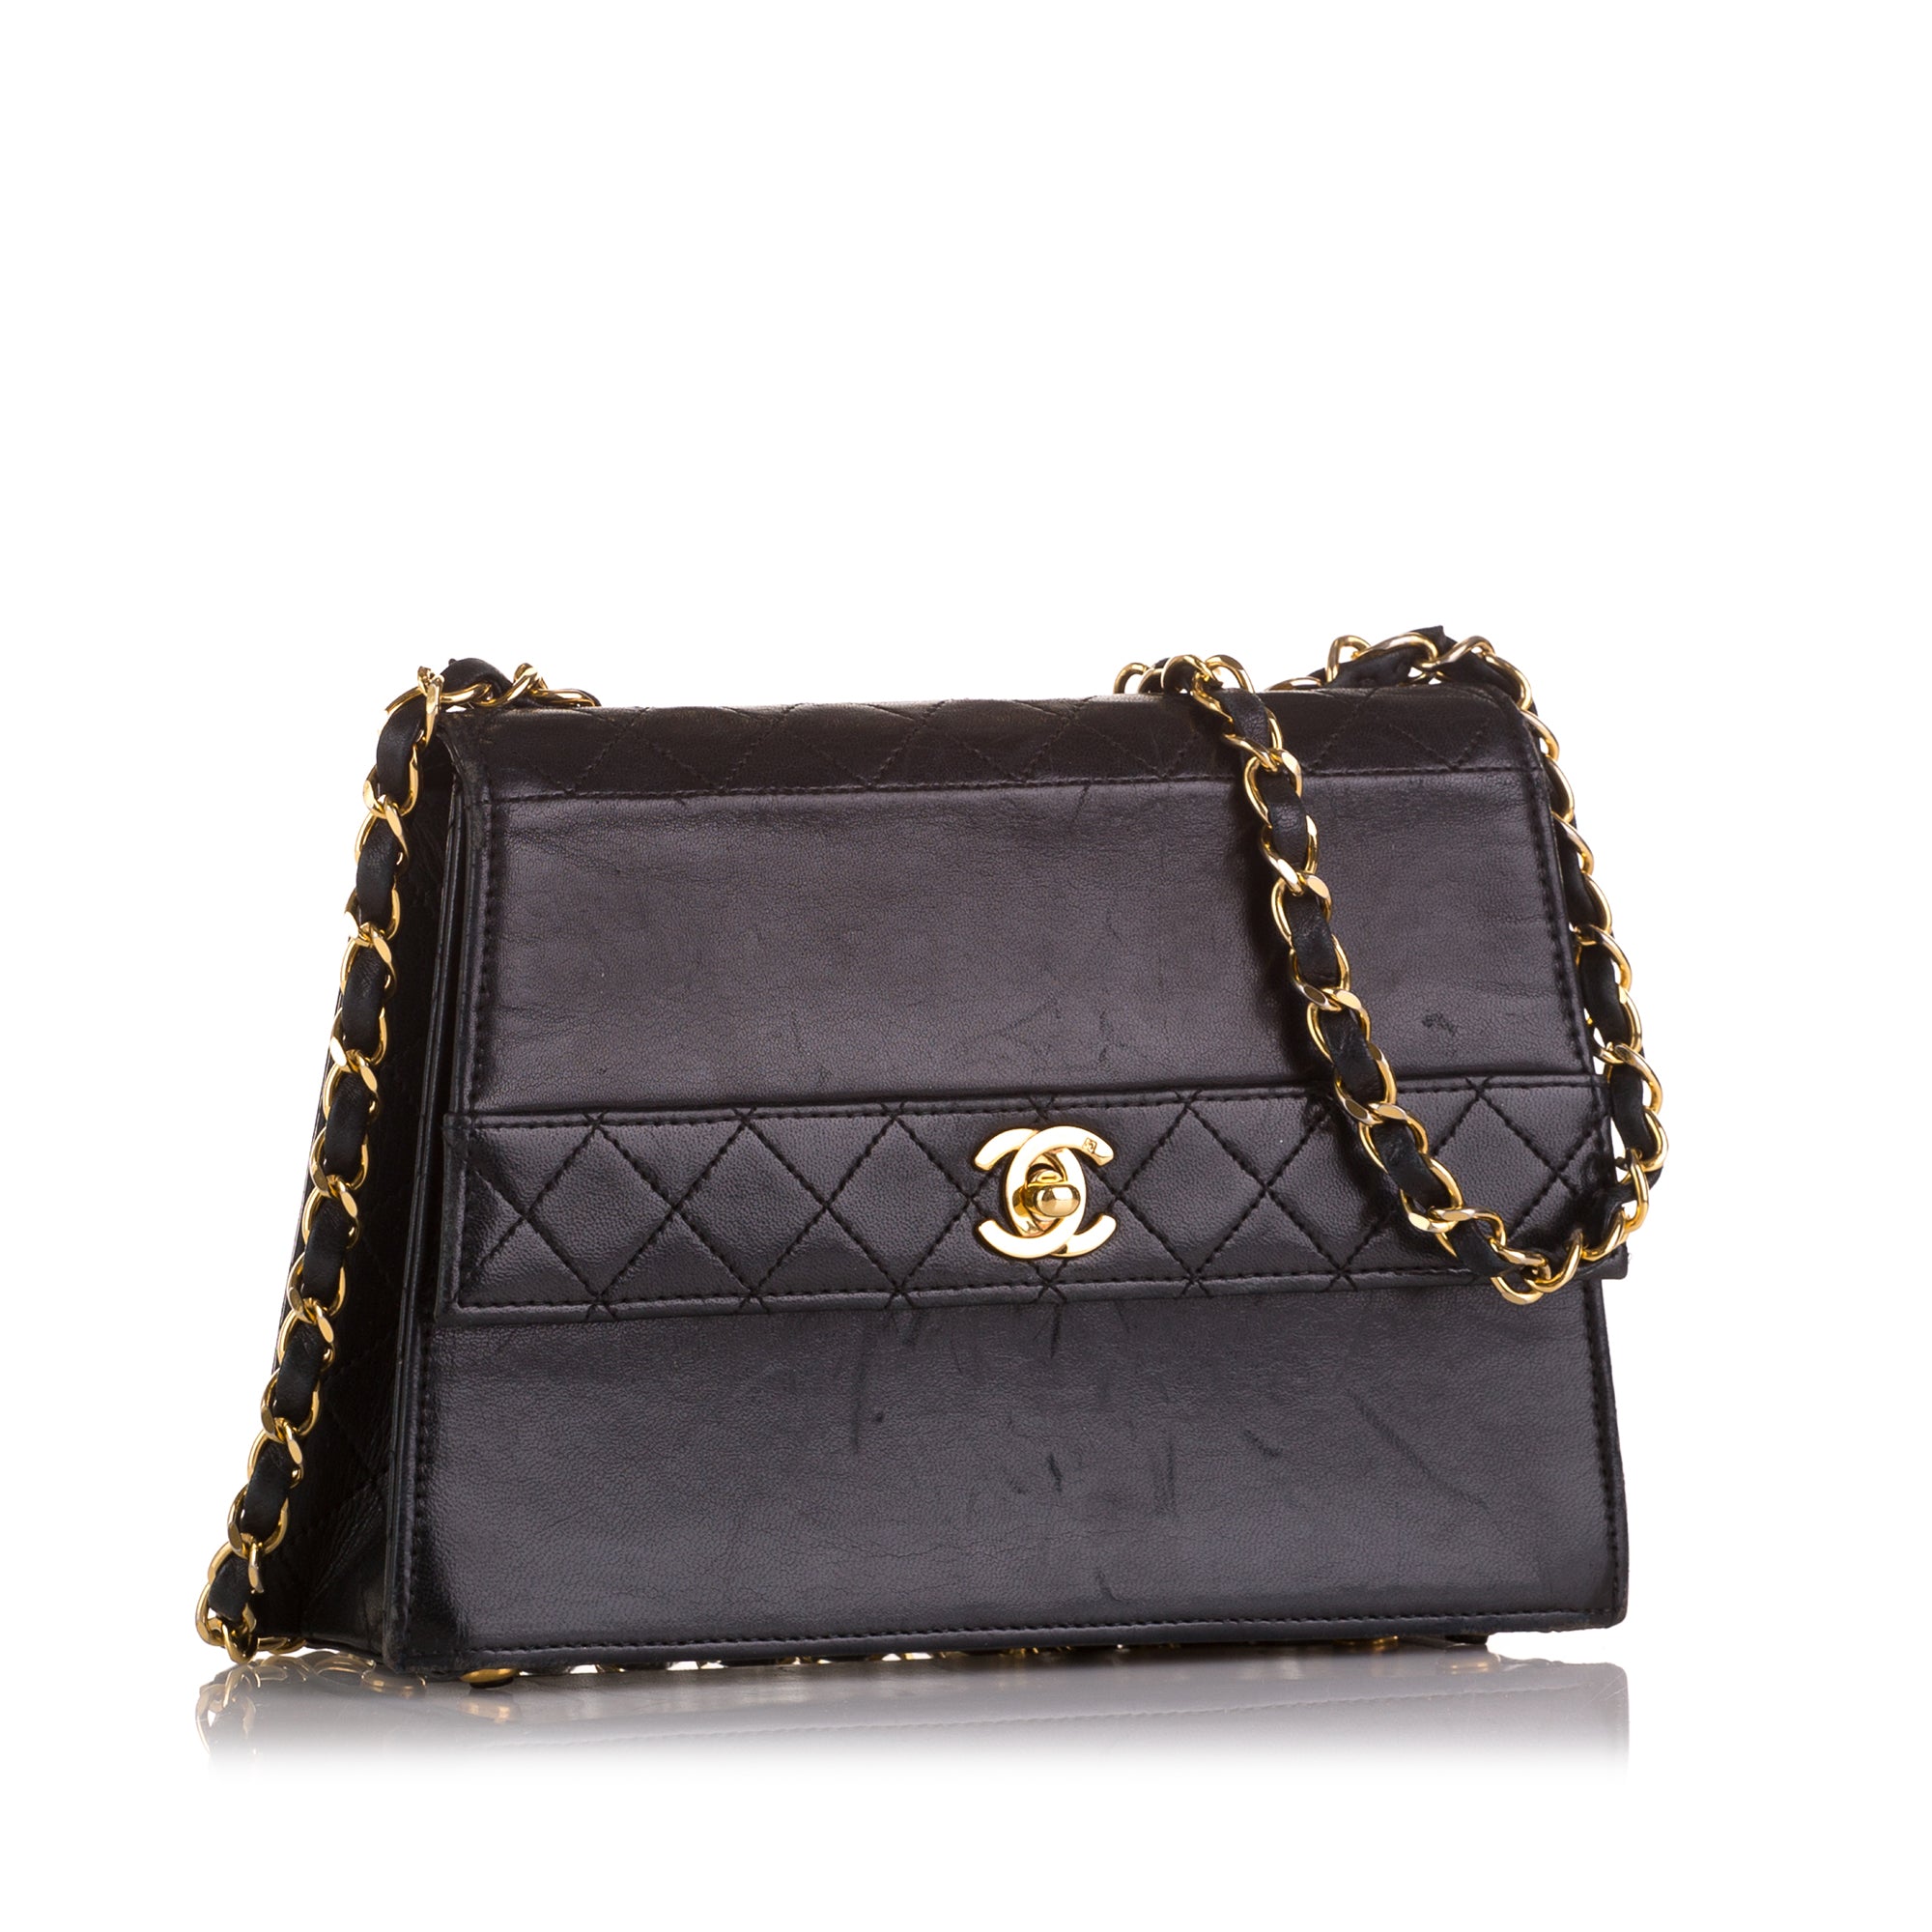 Black Chanel Timeless CC Lambskin Leather Flap Bag